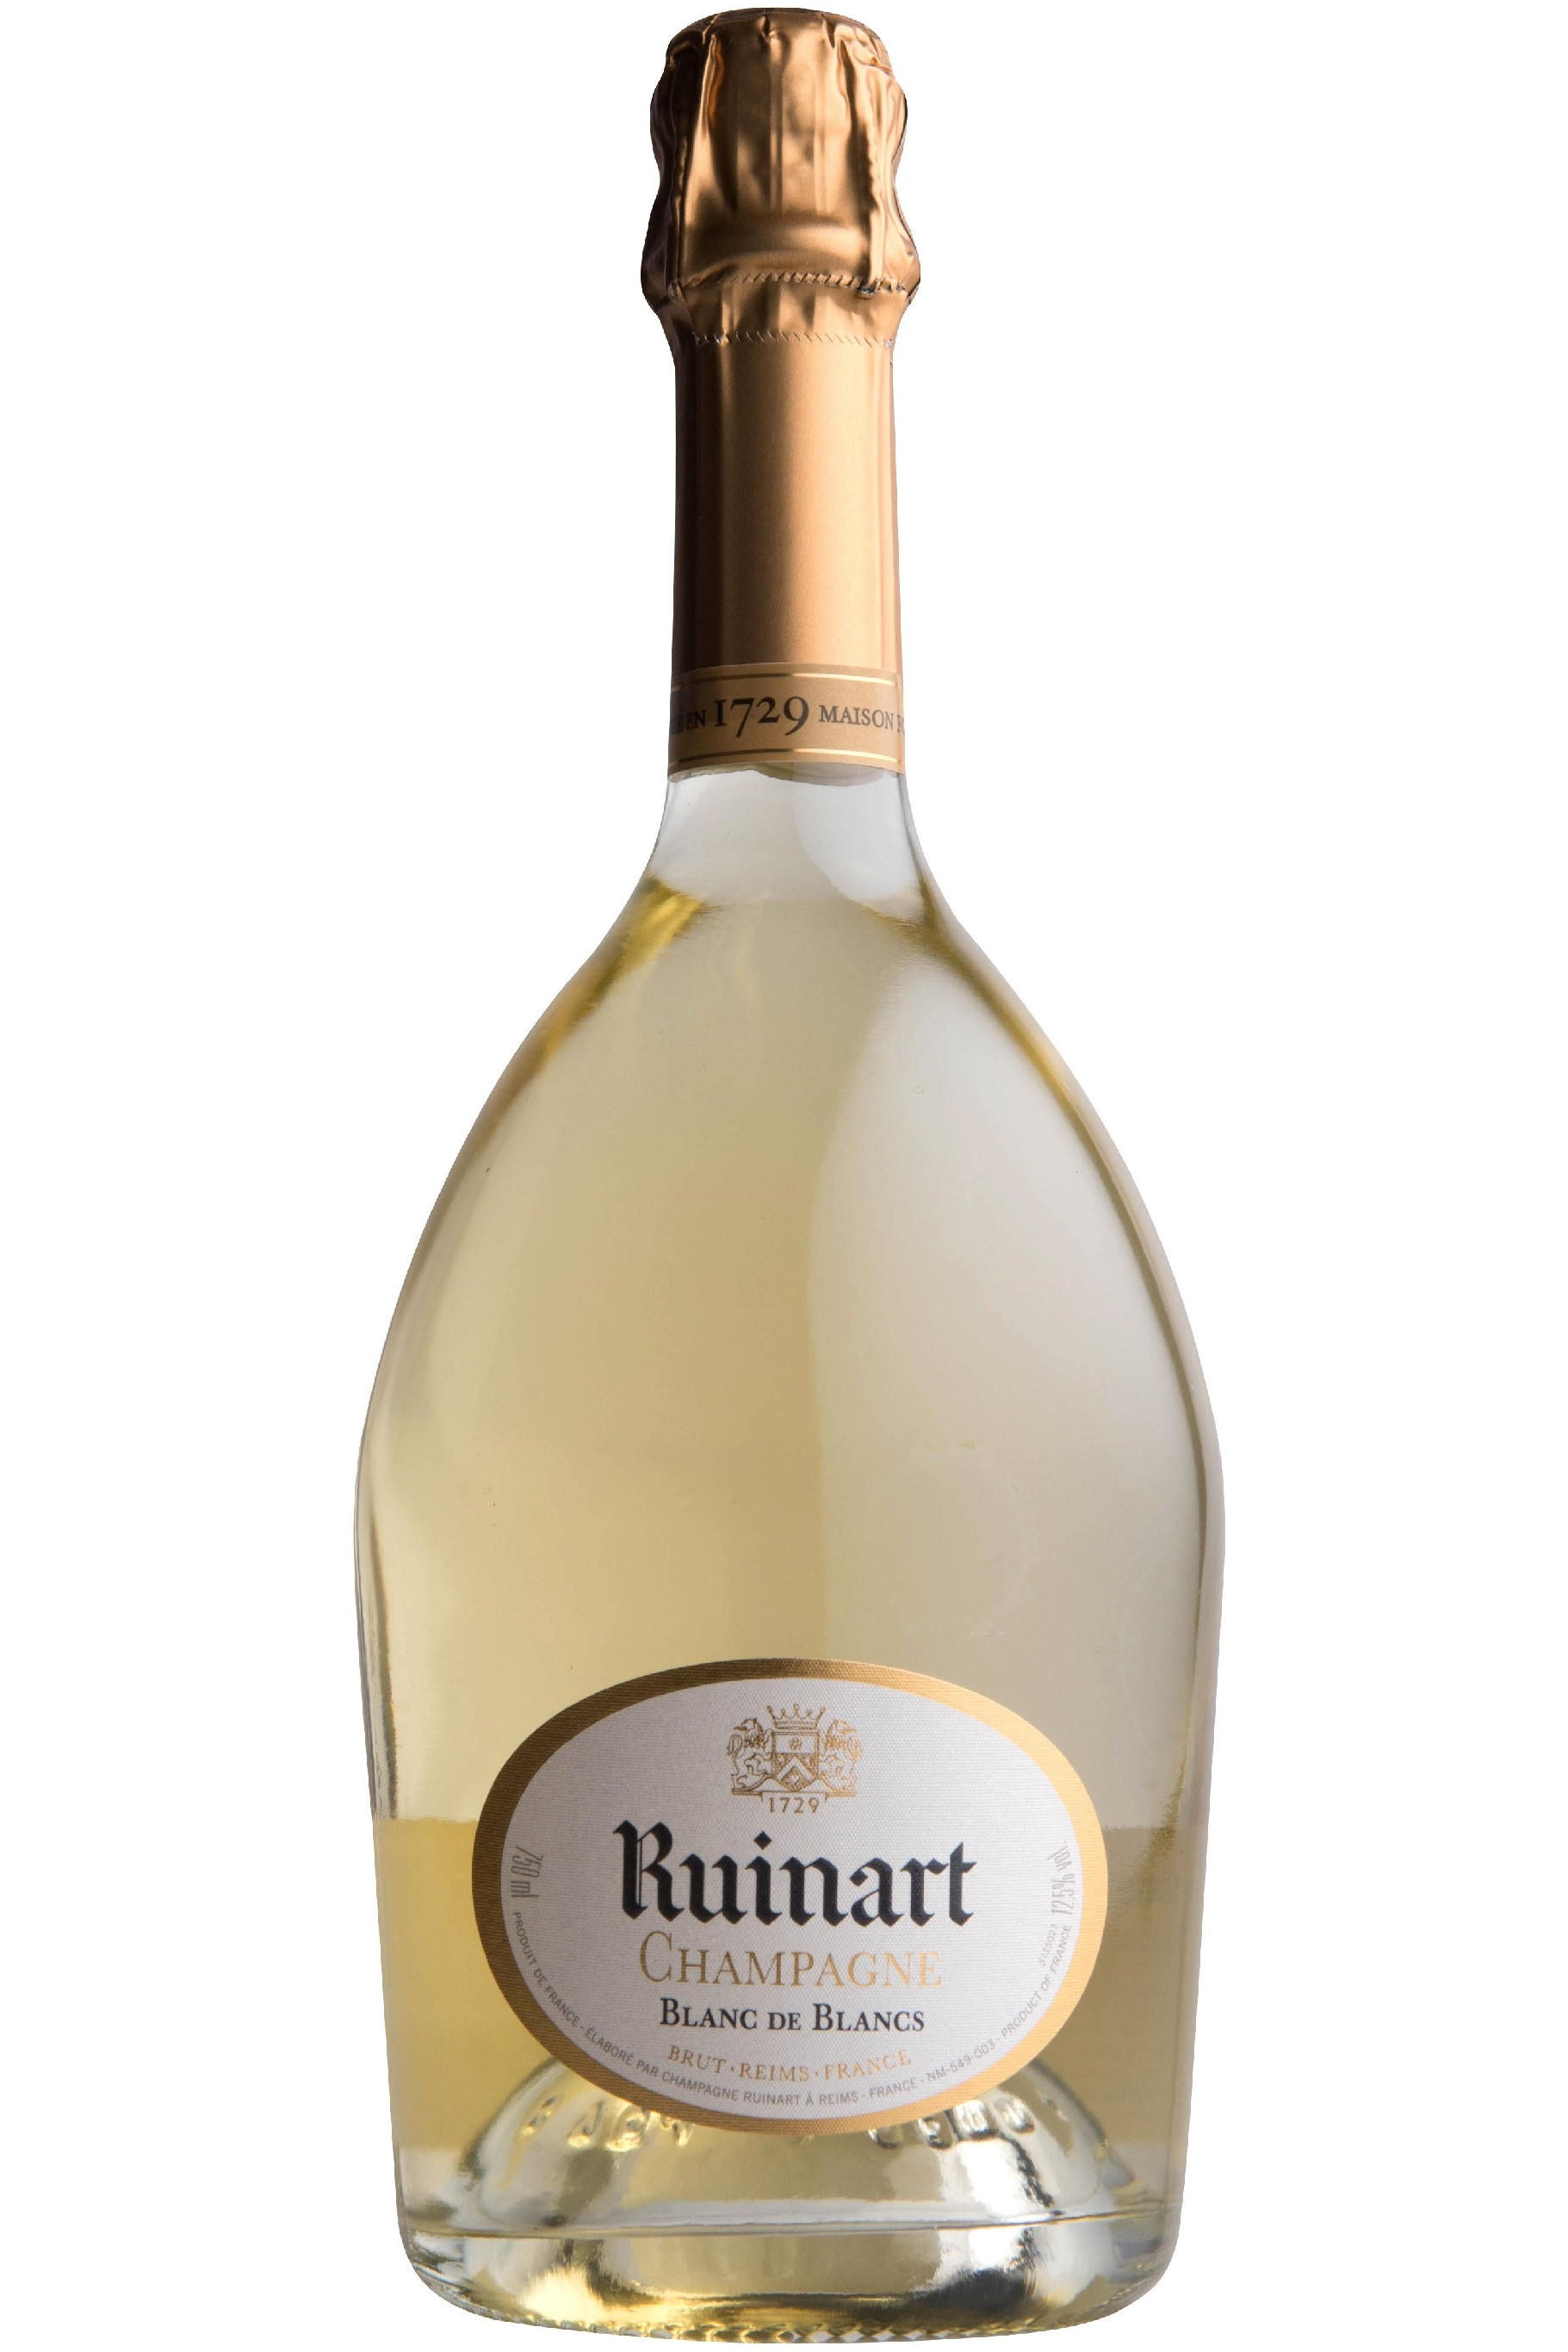 Buy Champagne Ruinart, Blanc de Blancs, Brut Wine - Berry Bros. & Rudd